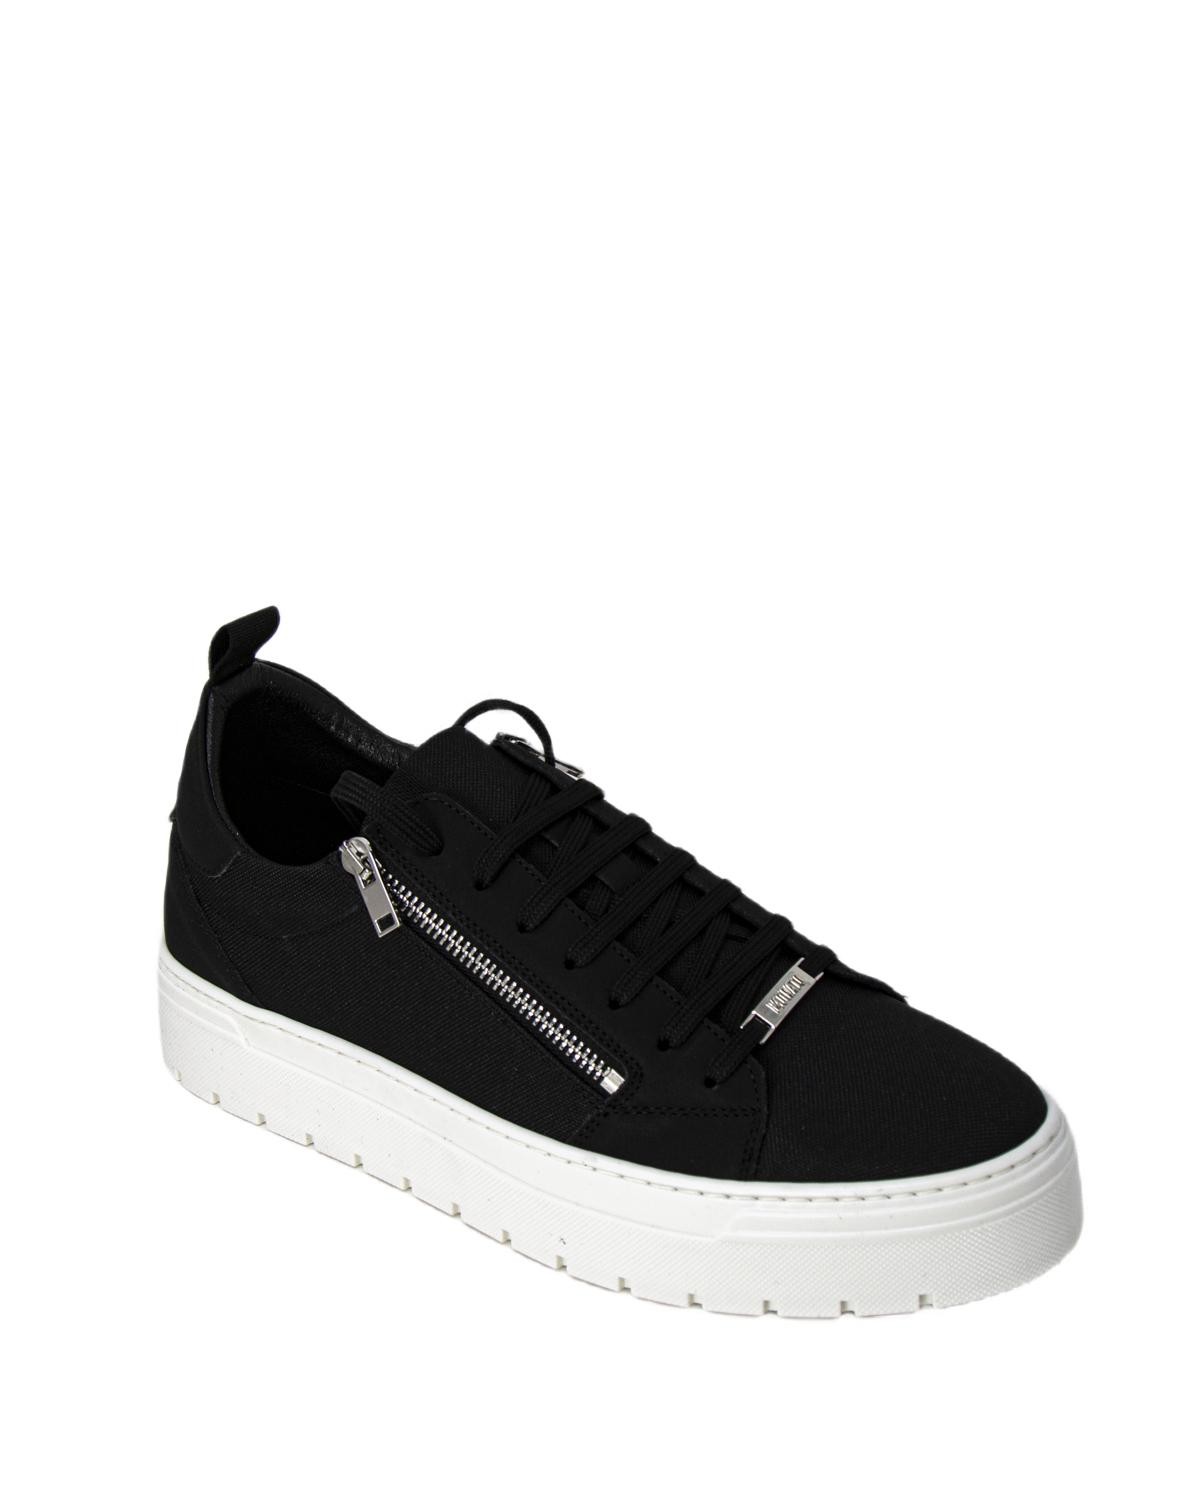 shoes men's ANTONY MORATO sneakers black GI802 - ZOOODE.COM